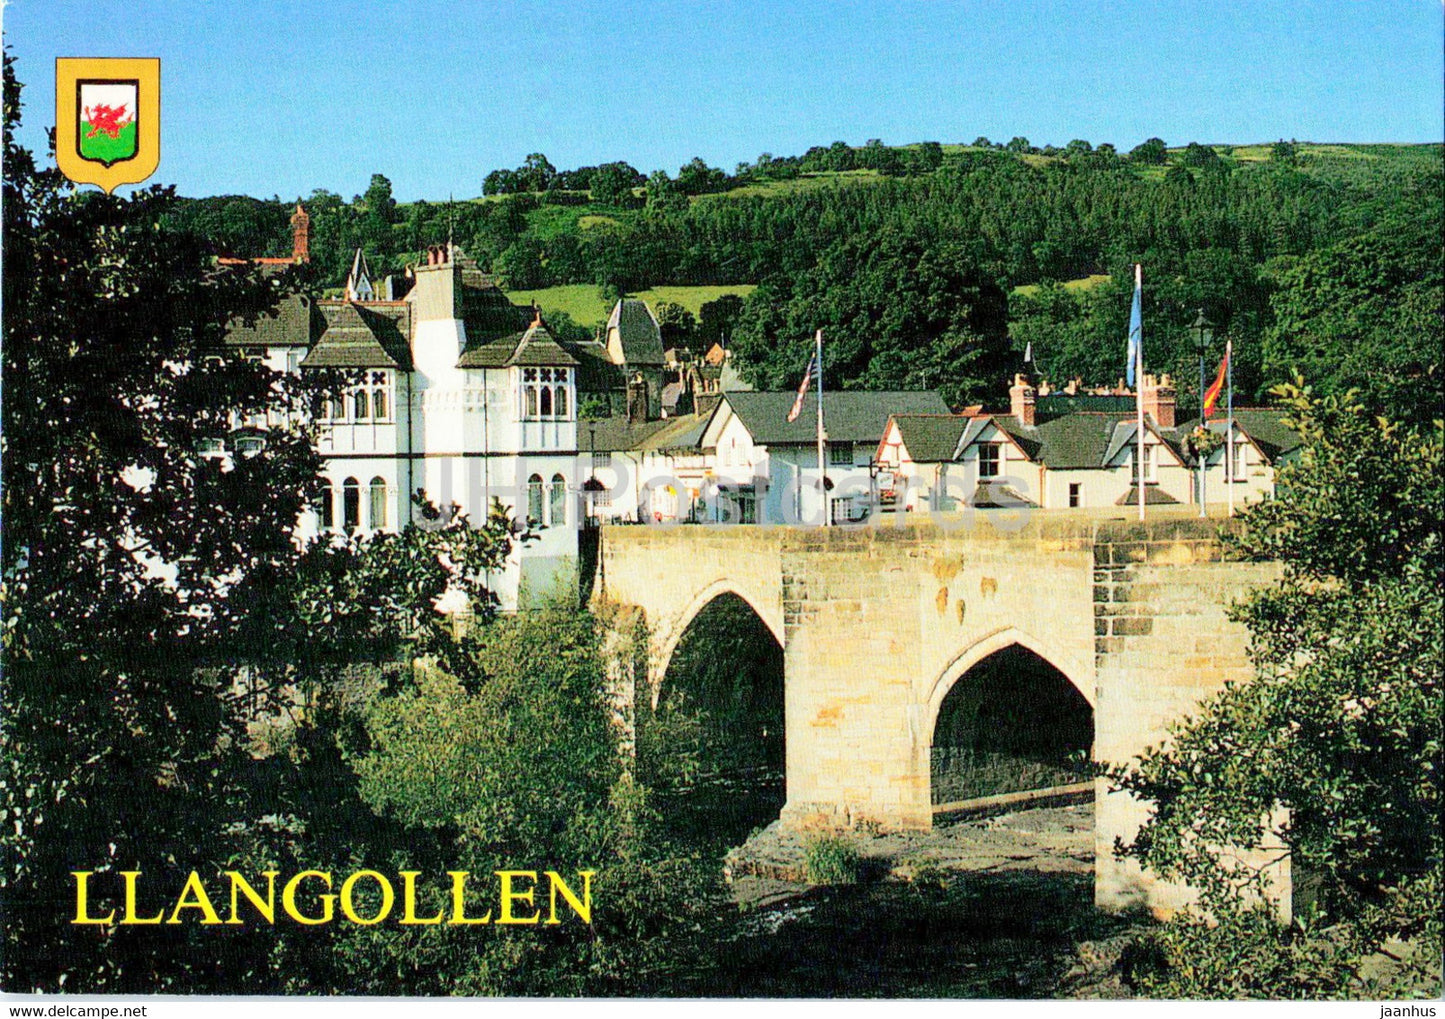 Llangollen Bridge spanning the river Dee - Wales - United Kingdom - unused - JH Postcards